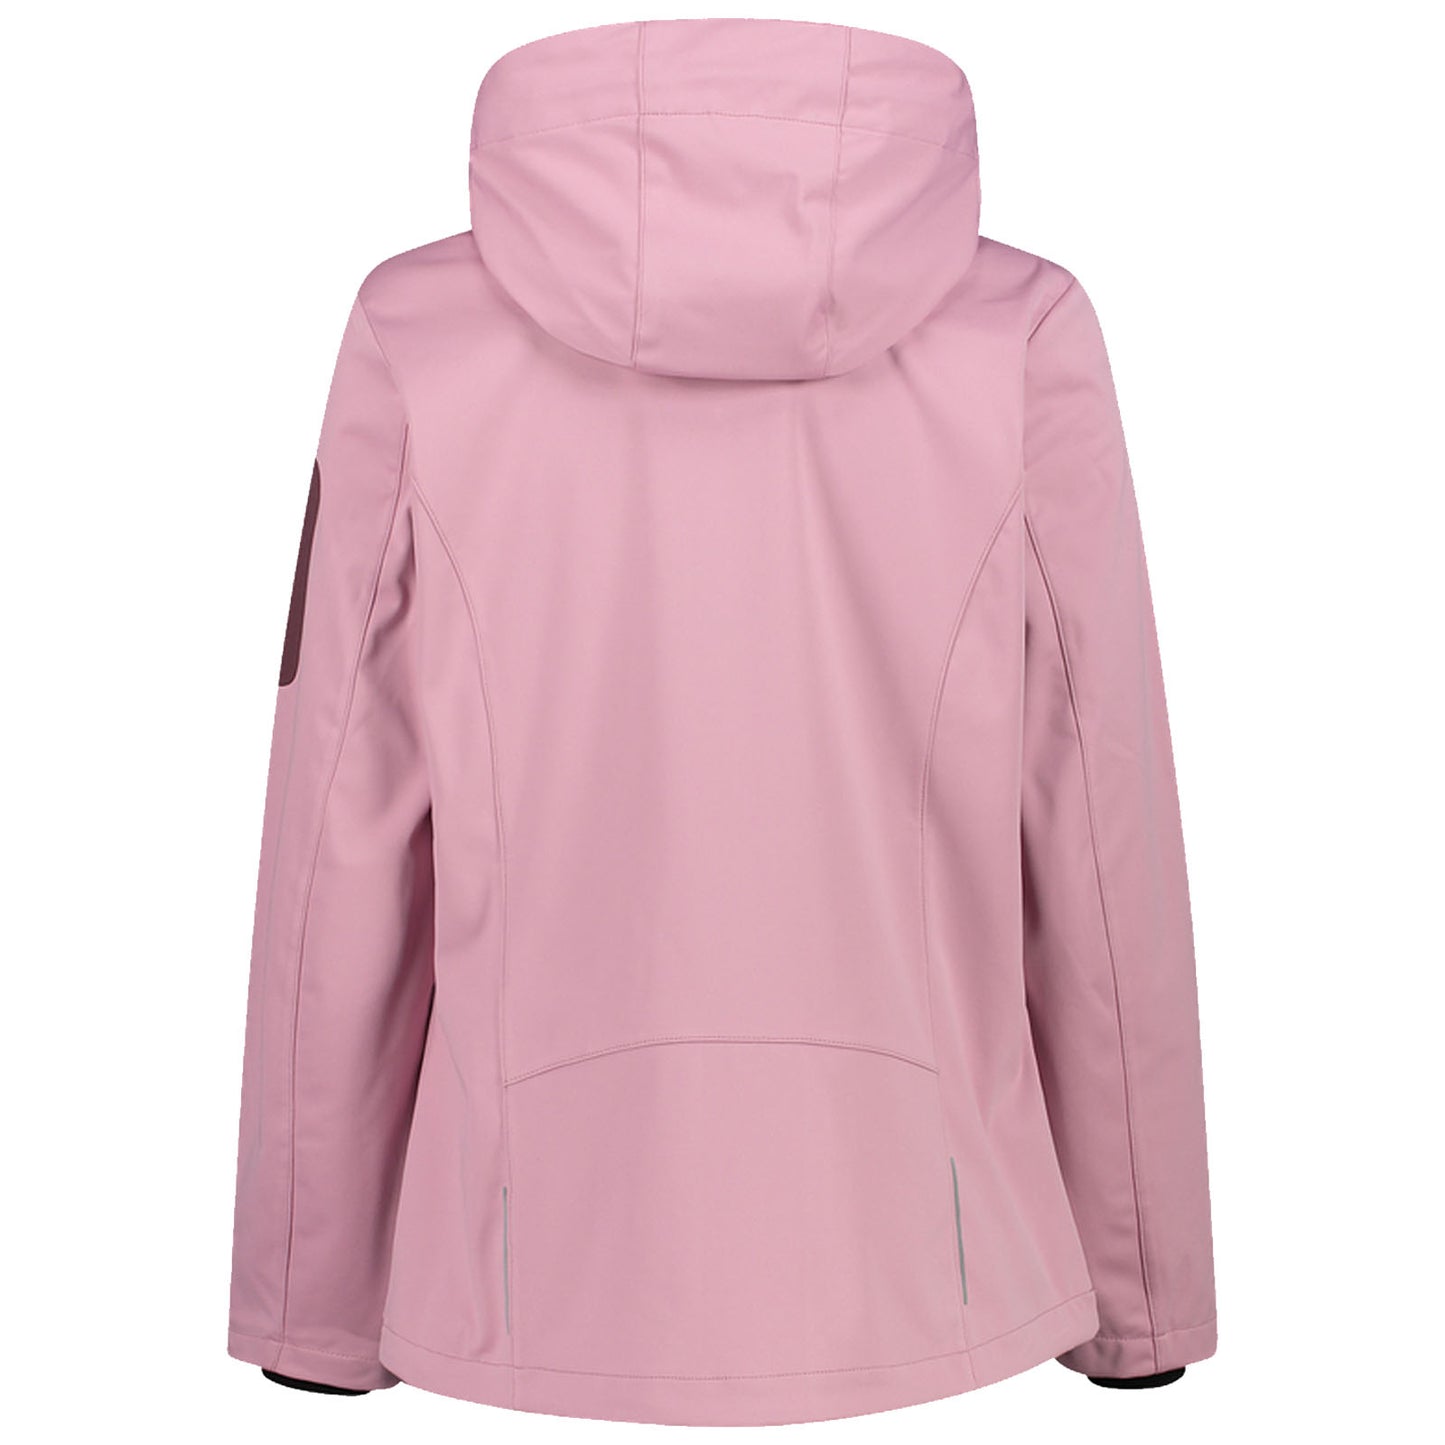 CMP Ladies Light Softshell Fleece Jacket – More Sports